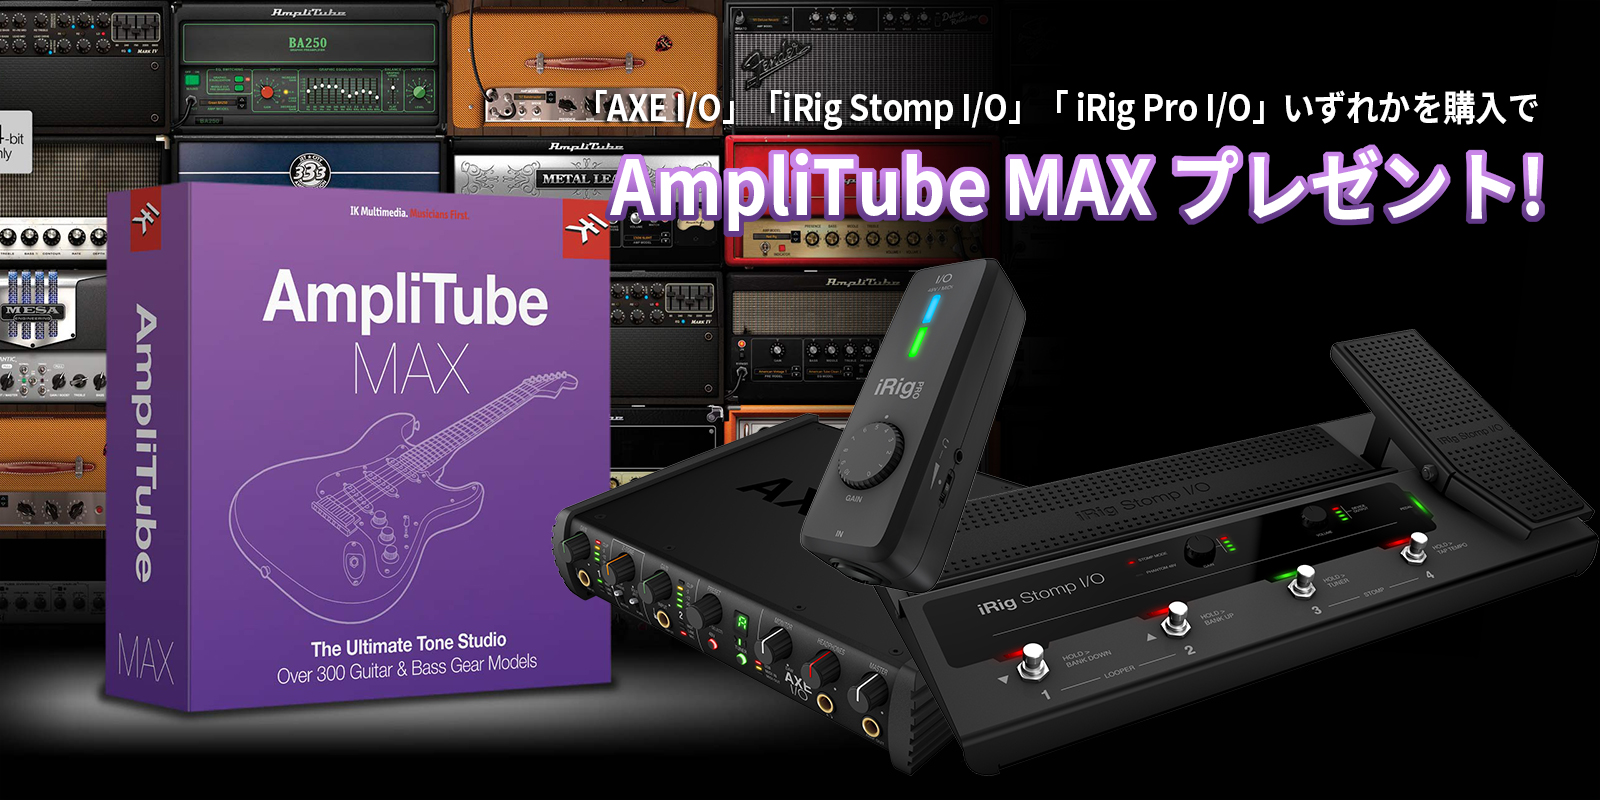 【DTM】IK Multimedia 対象製品を購入/登録で AmpliTube MAX がもらえるキャンペーン